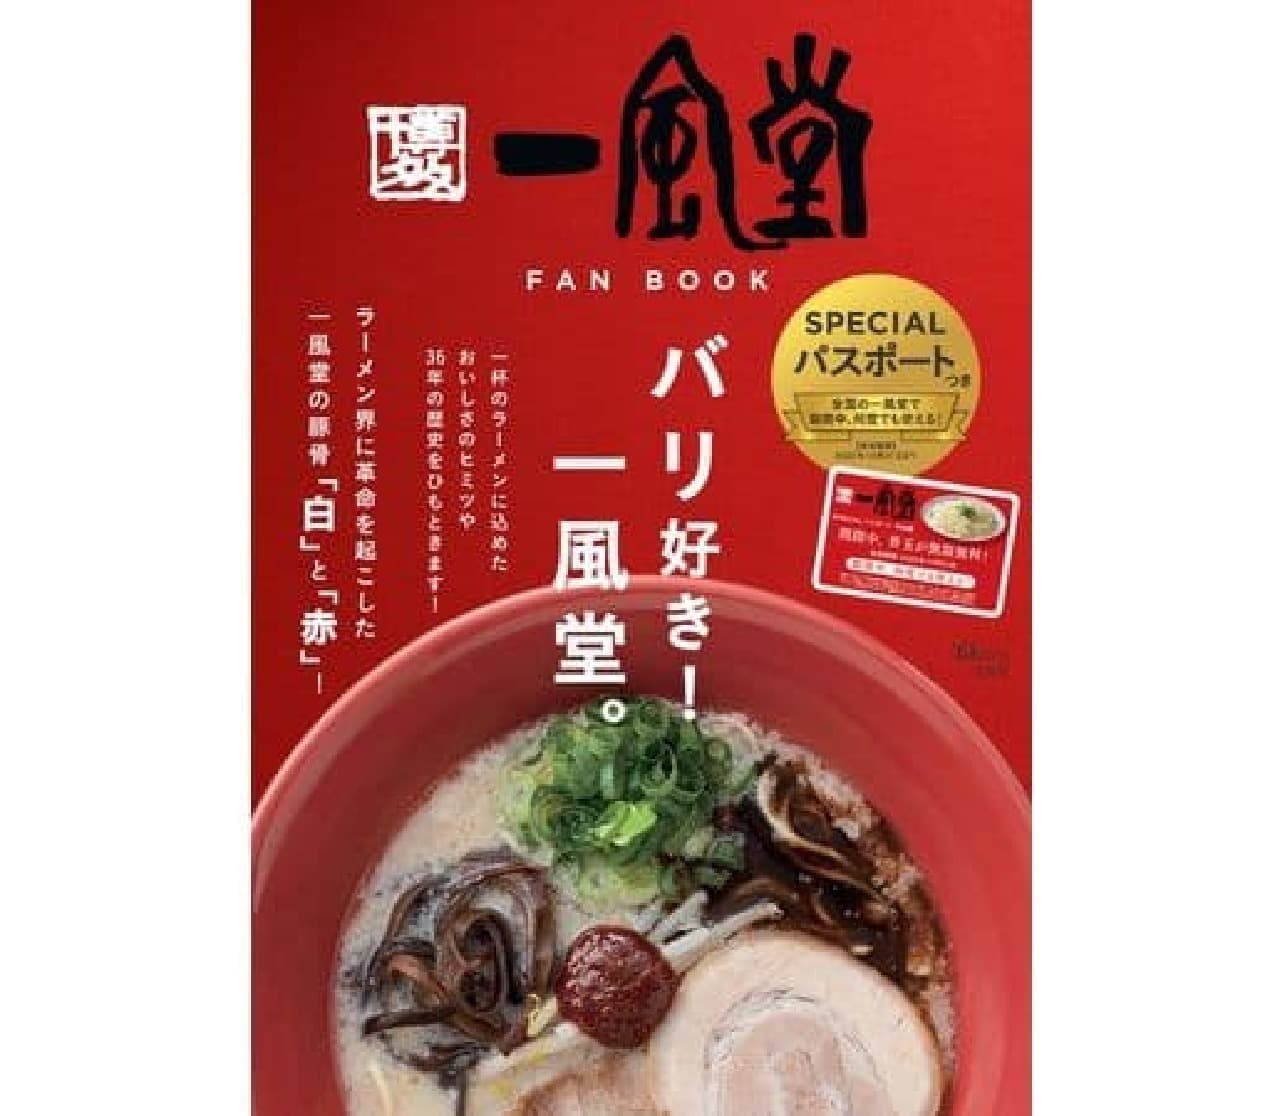 Takarajimasha's popular restaurant chain official fan book "Ippudo FAN BOOK"